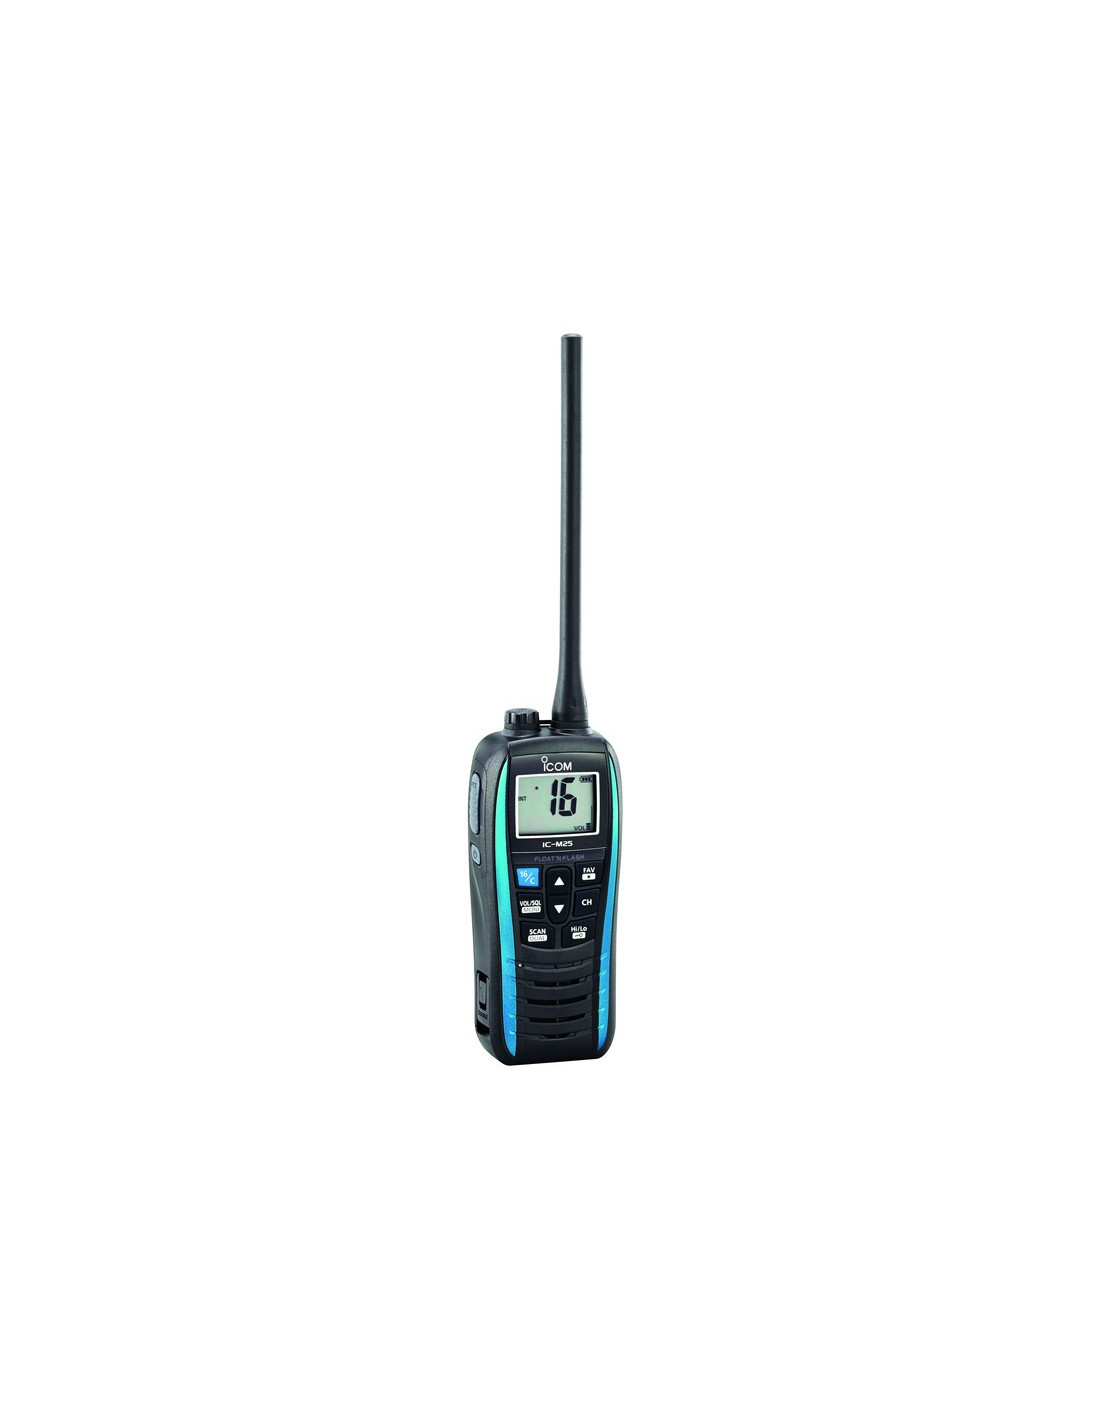 VHF portative - Icom M25 - 3 coloris